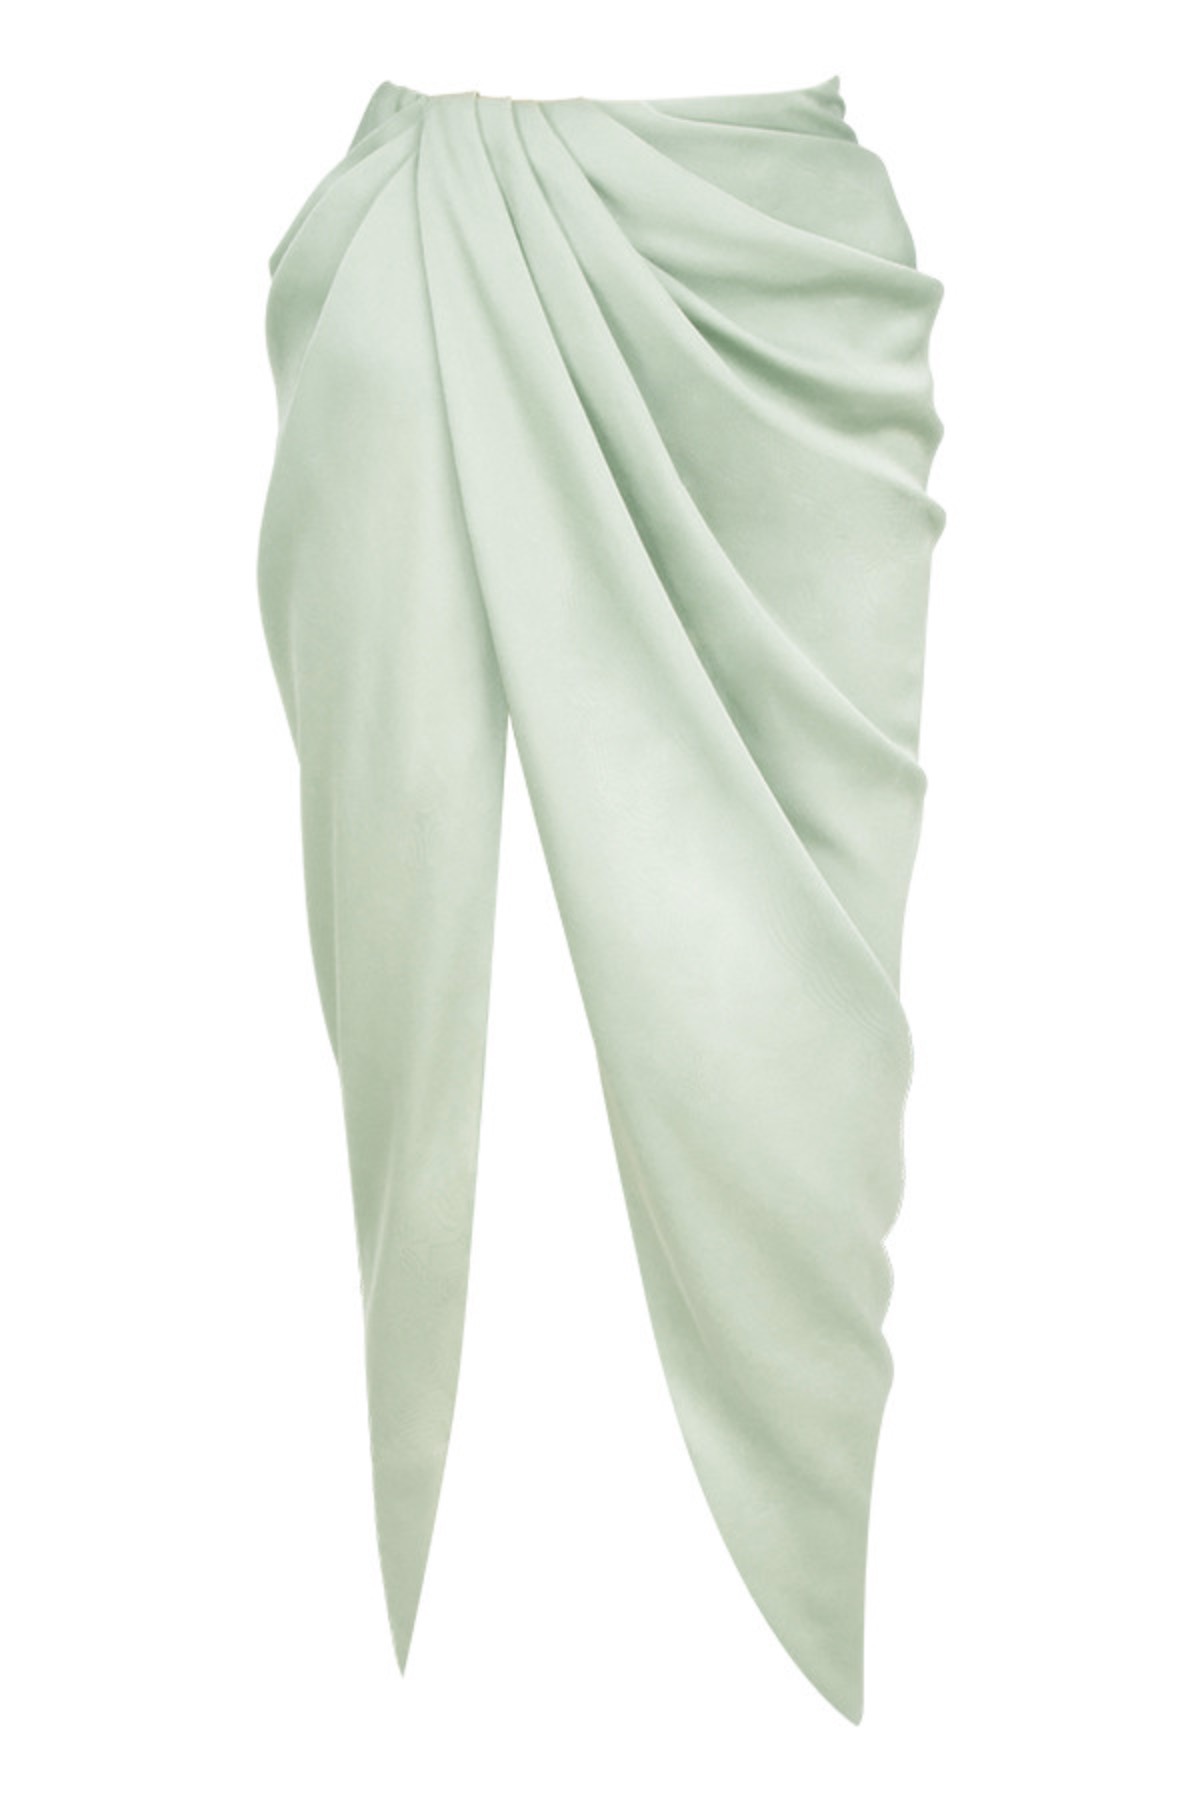 La falda ‘Tosca’ de la firma ‘House of CB’